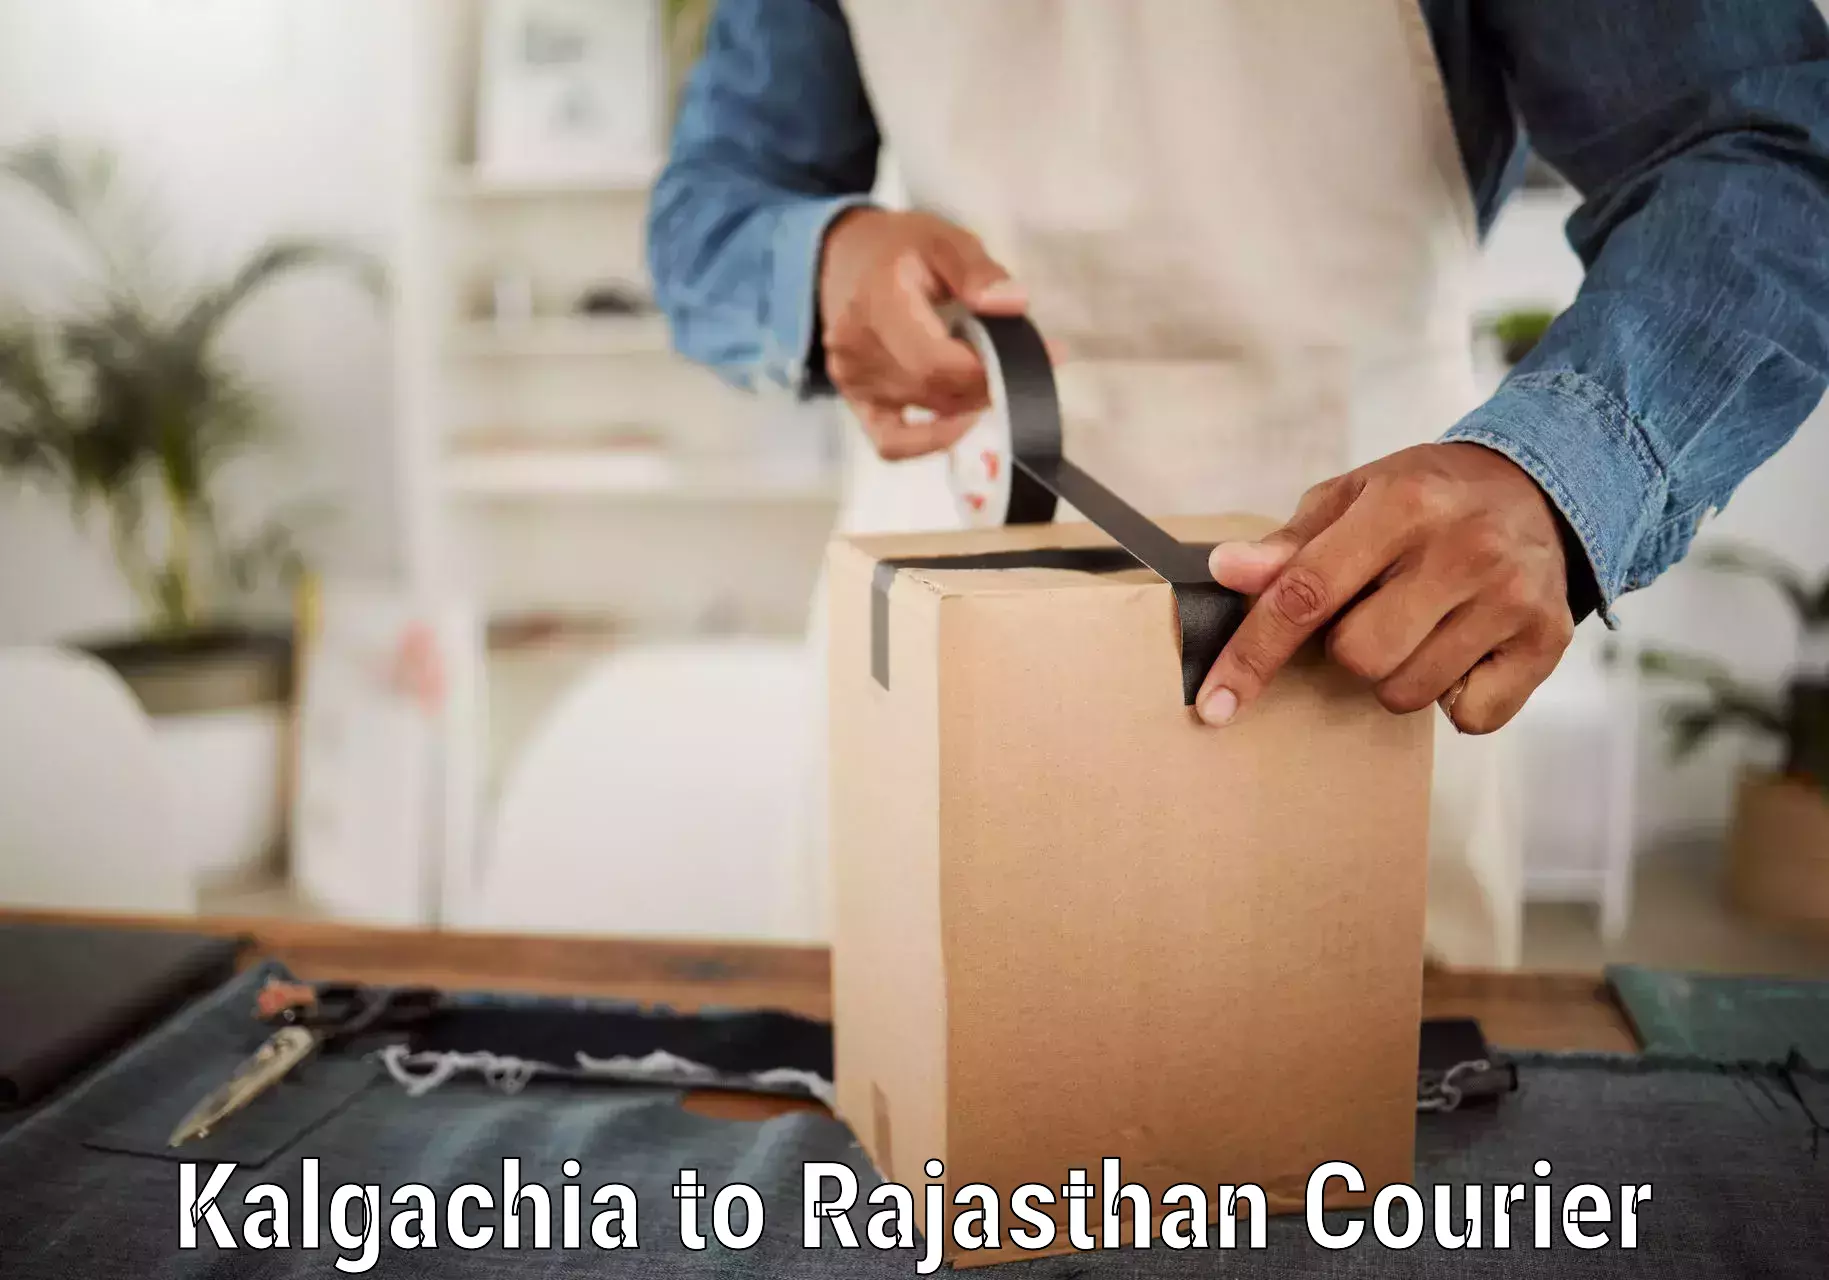 Professional courier handling Kalgachia to Yeswanthapur